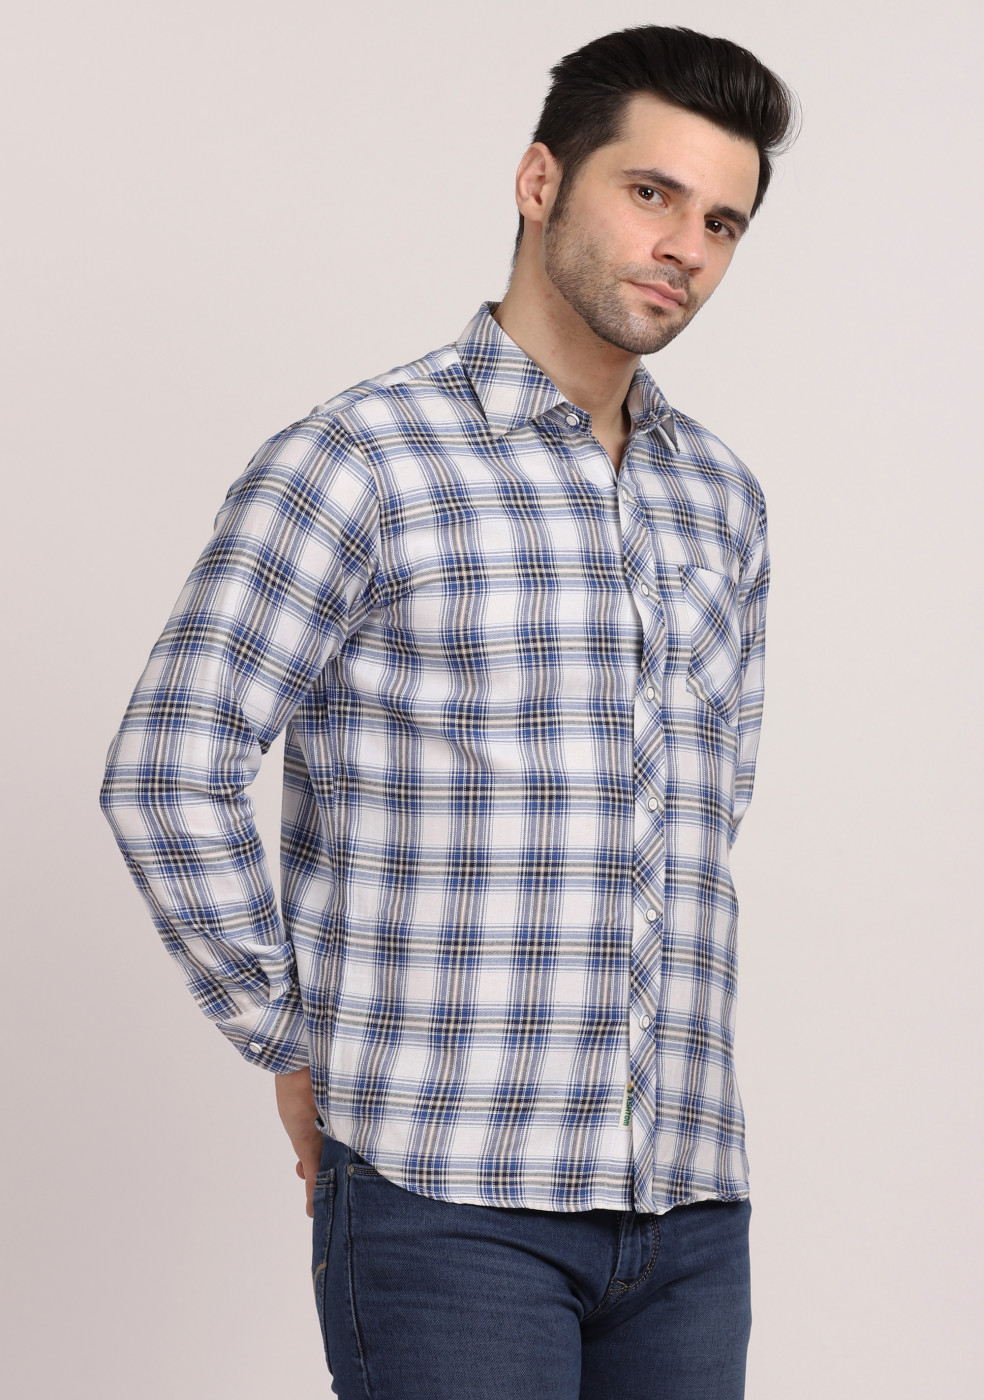 ASHTOM White Blue Big Mix Check Regular Fit Cotton Shirt For Men